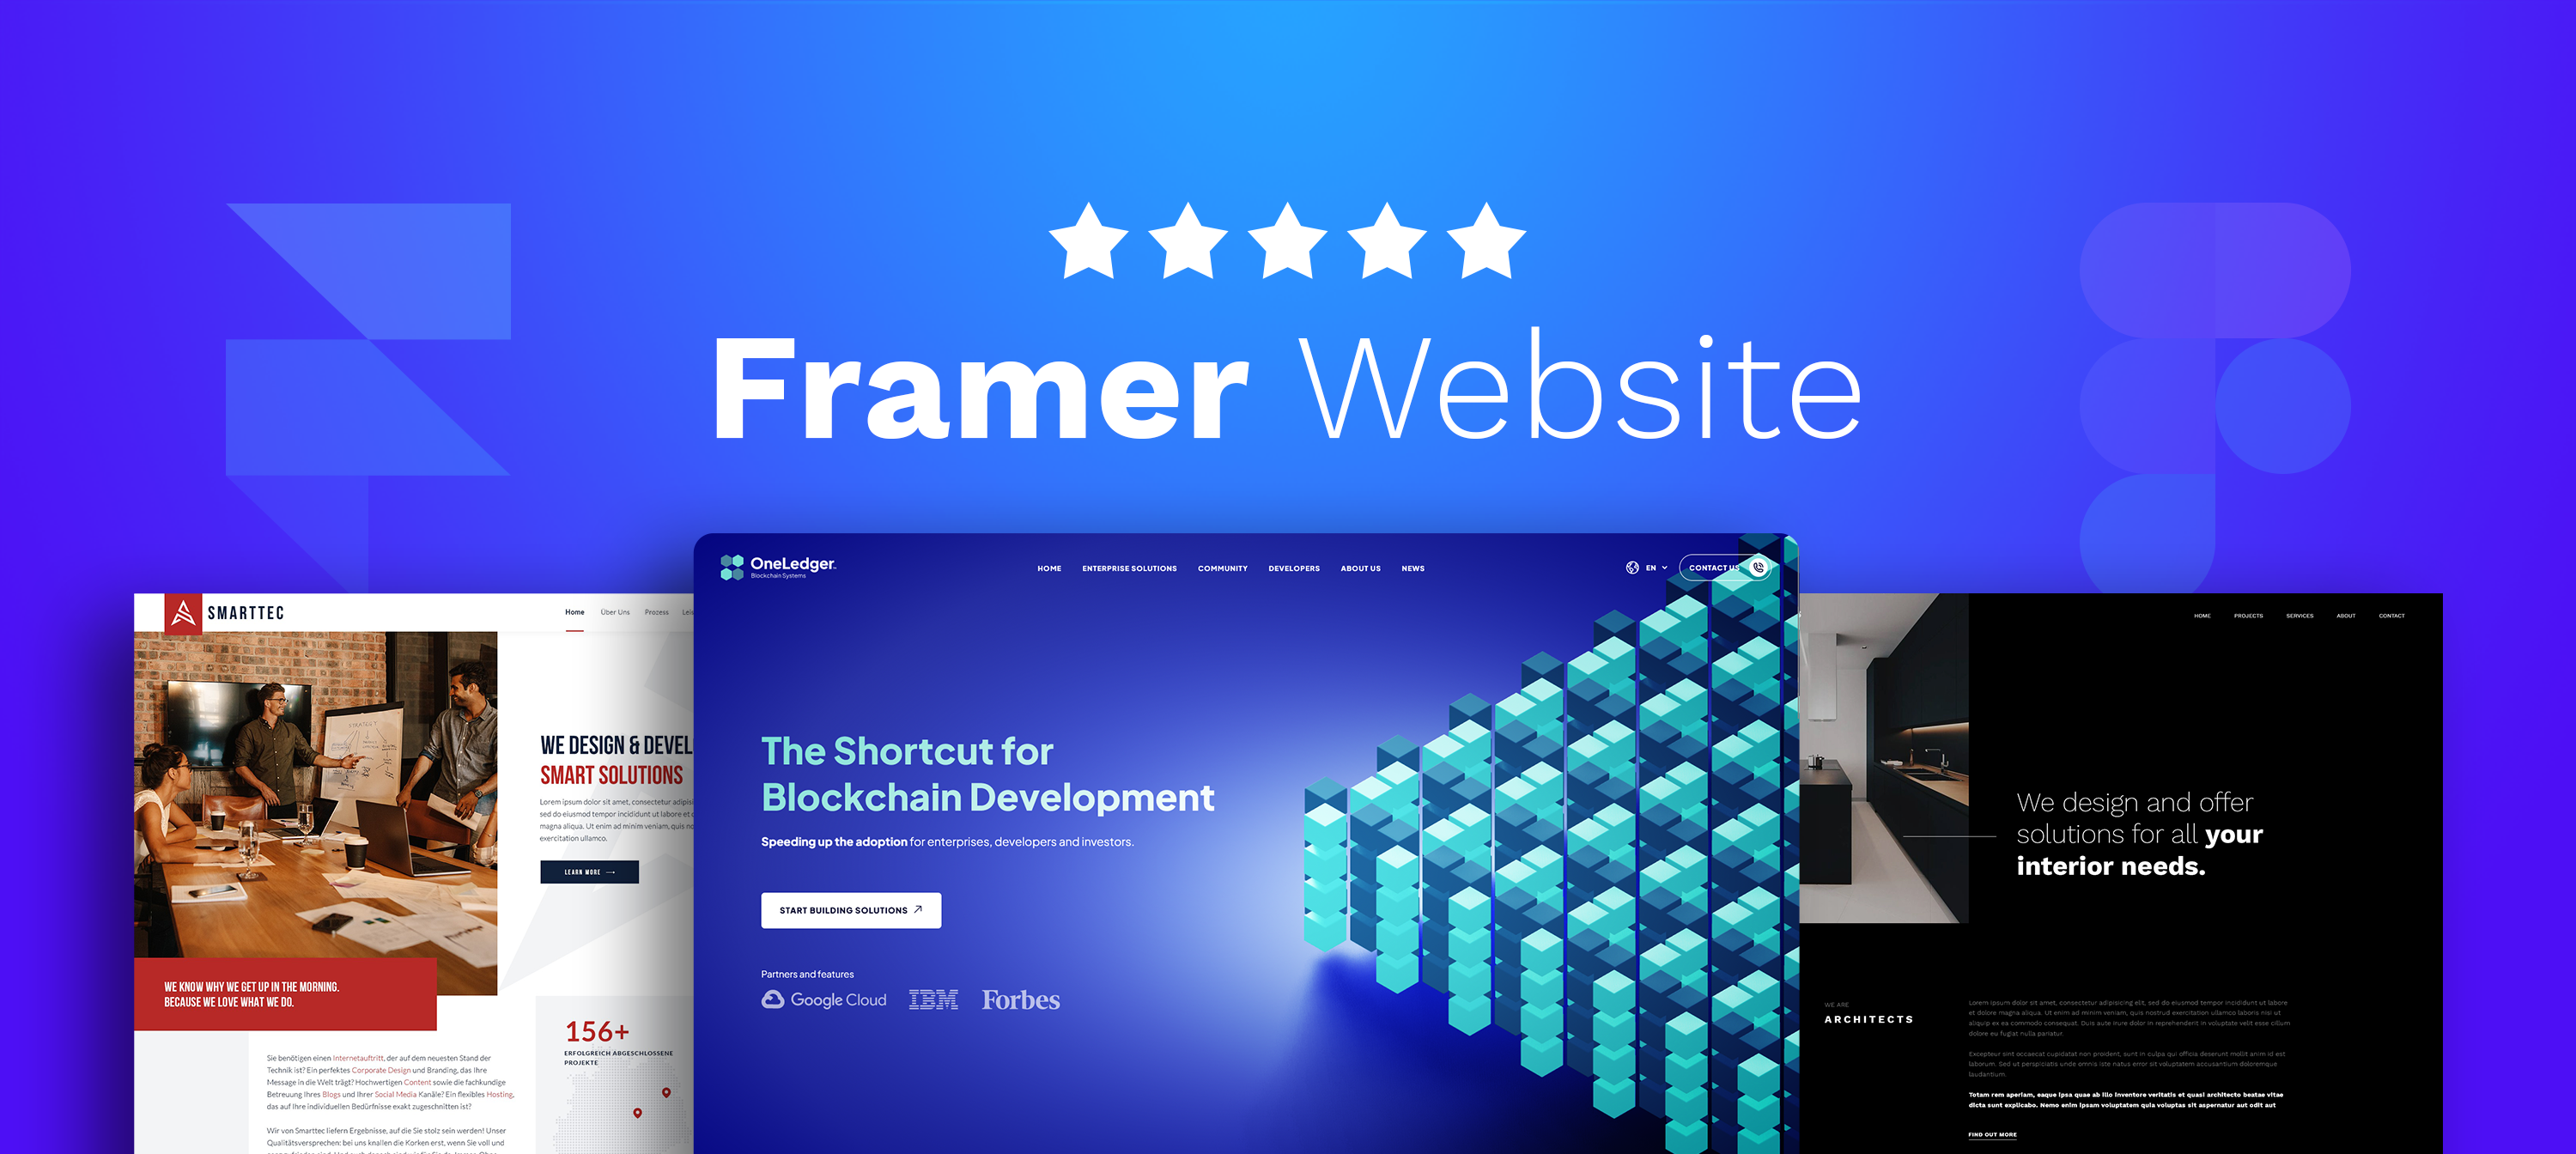 Framer website design and development